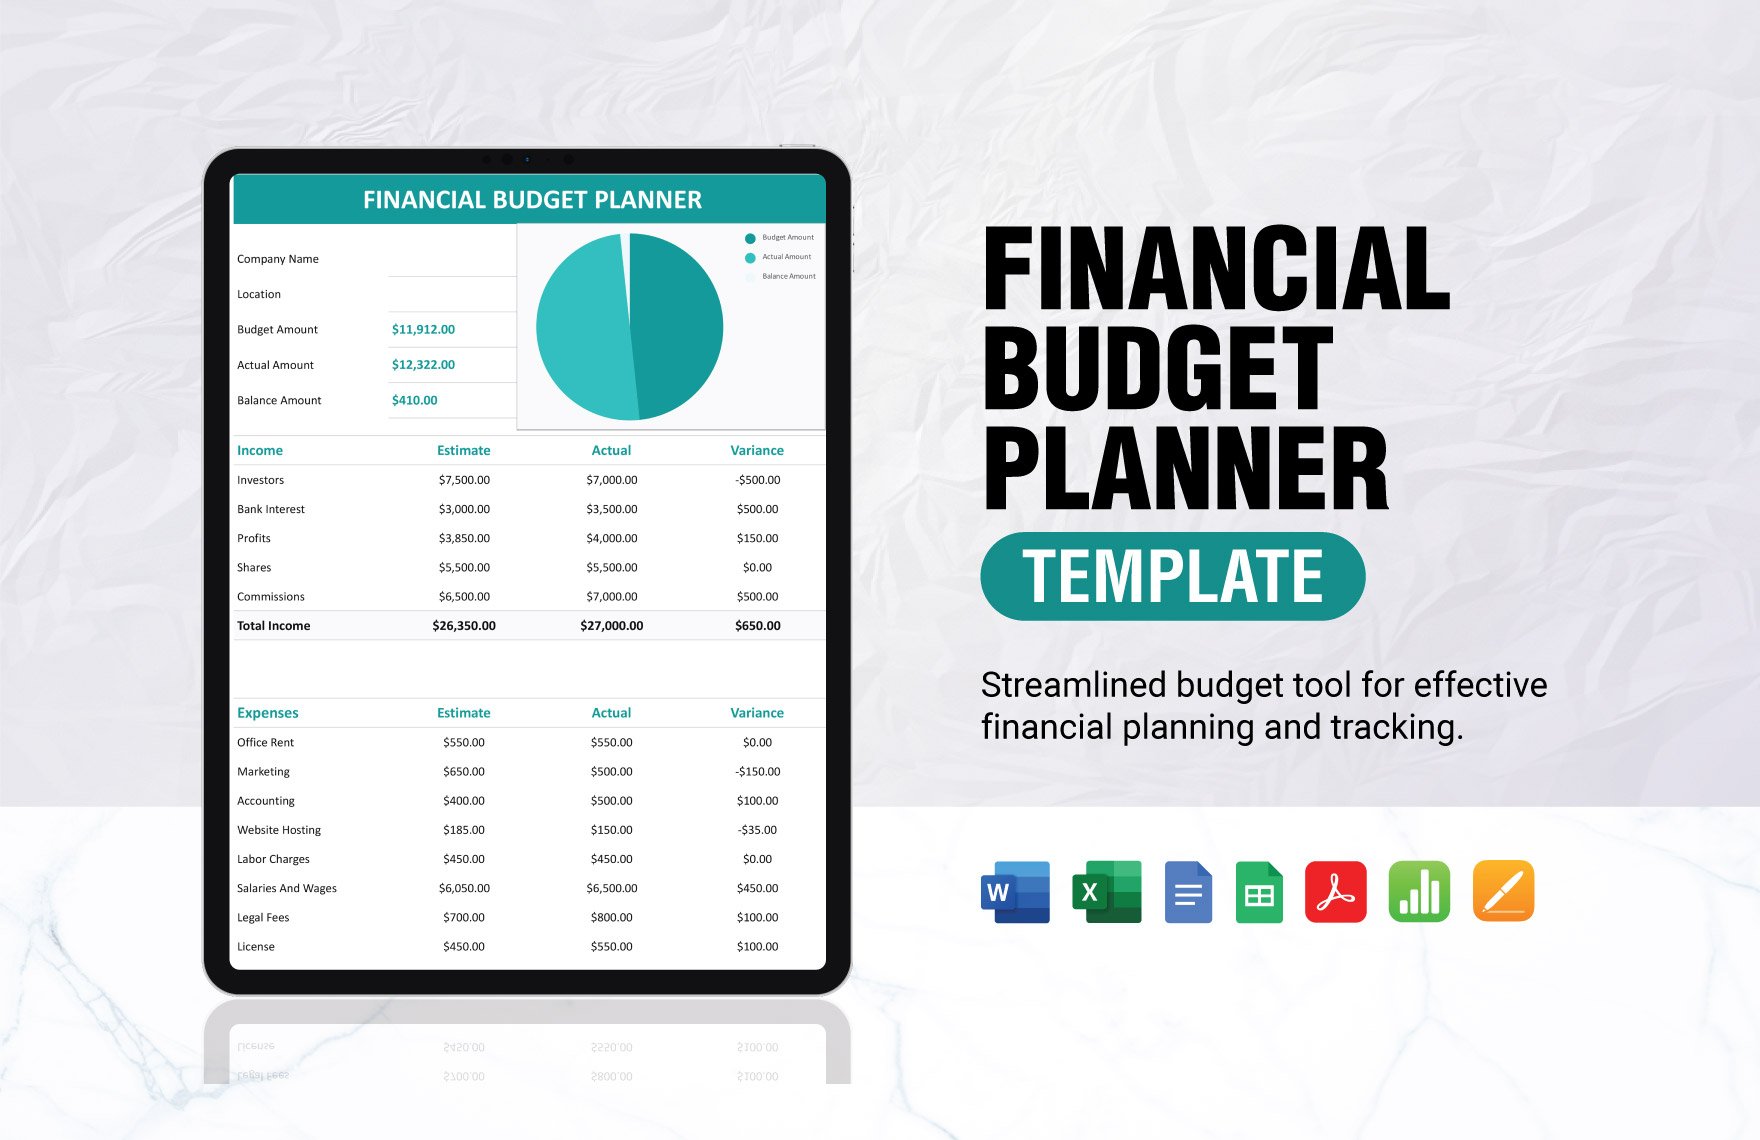 Financial Budget Planner Template